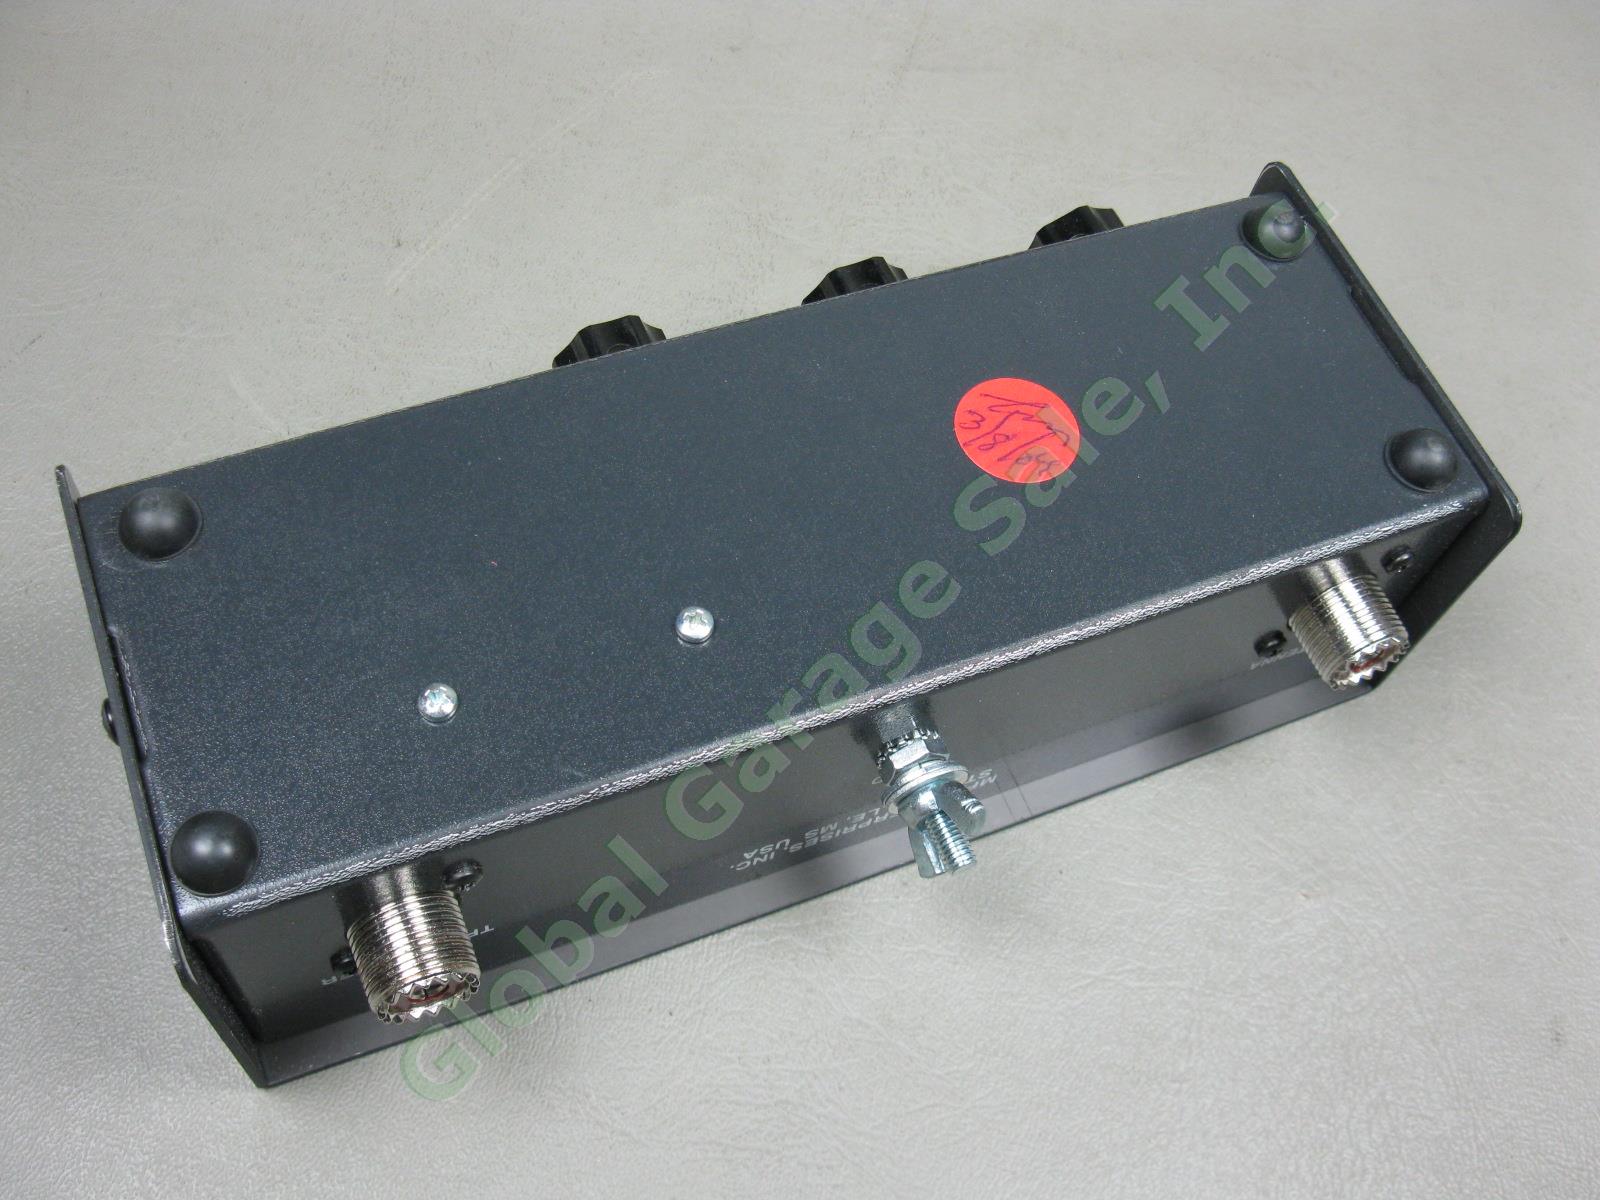 Black MFJ-921 VHF Dual Band Ham Radio Antenna Tuner 144-220MHz Tested Works + NR 5